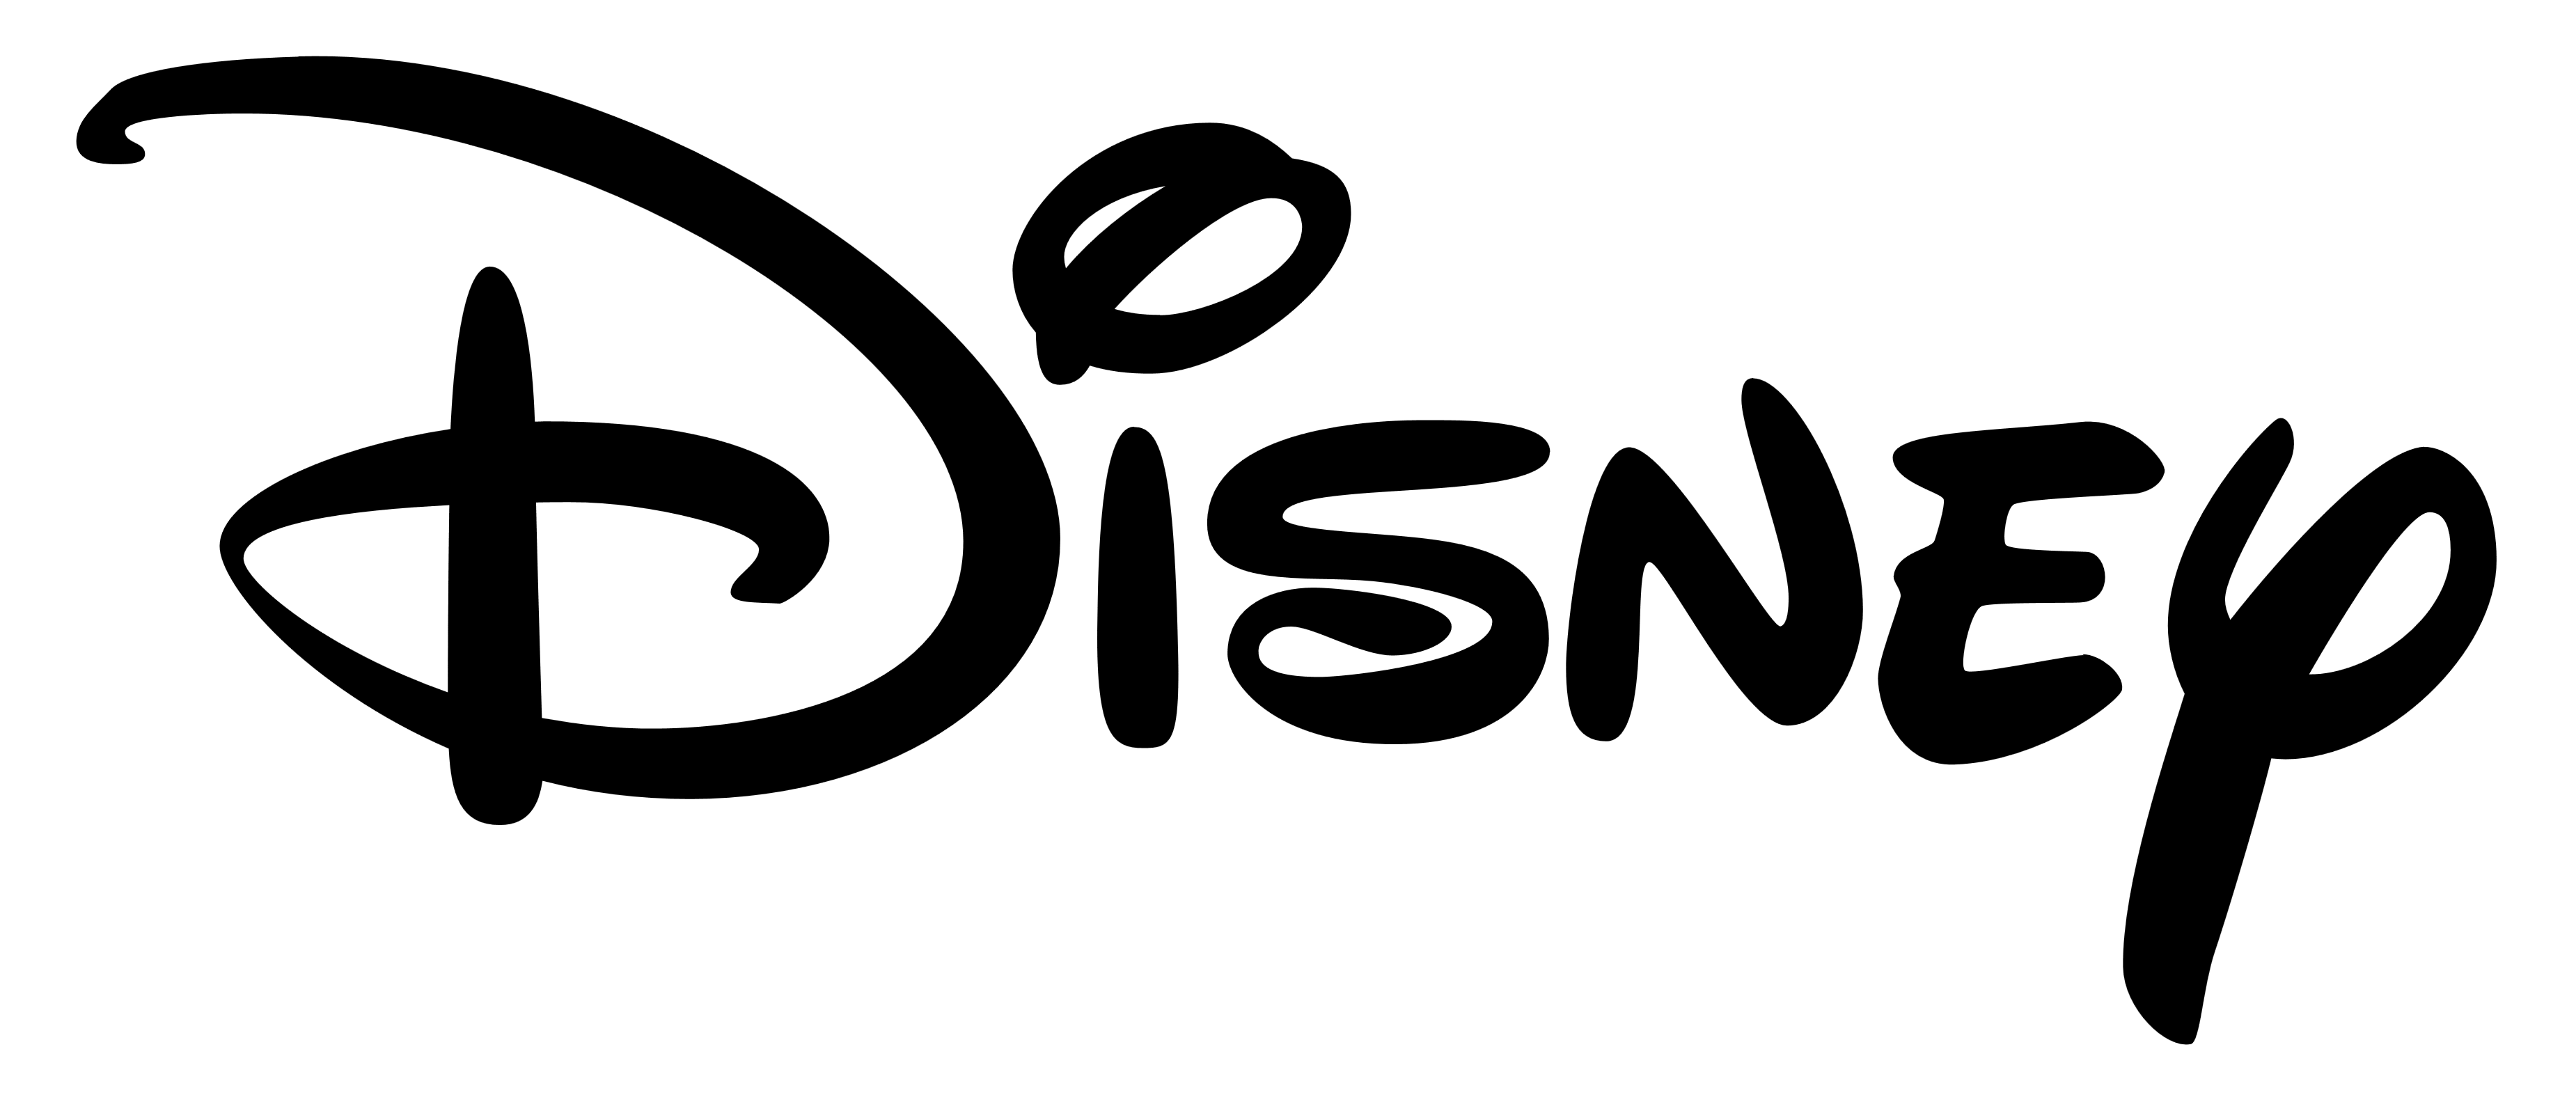 Diney Logo - The Walt Disney Company